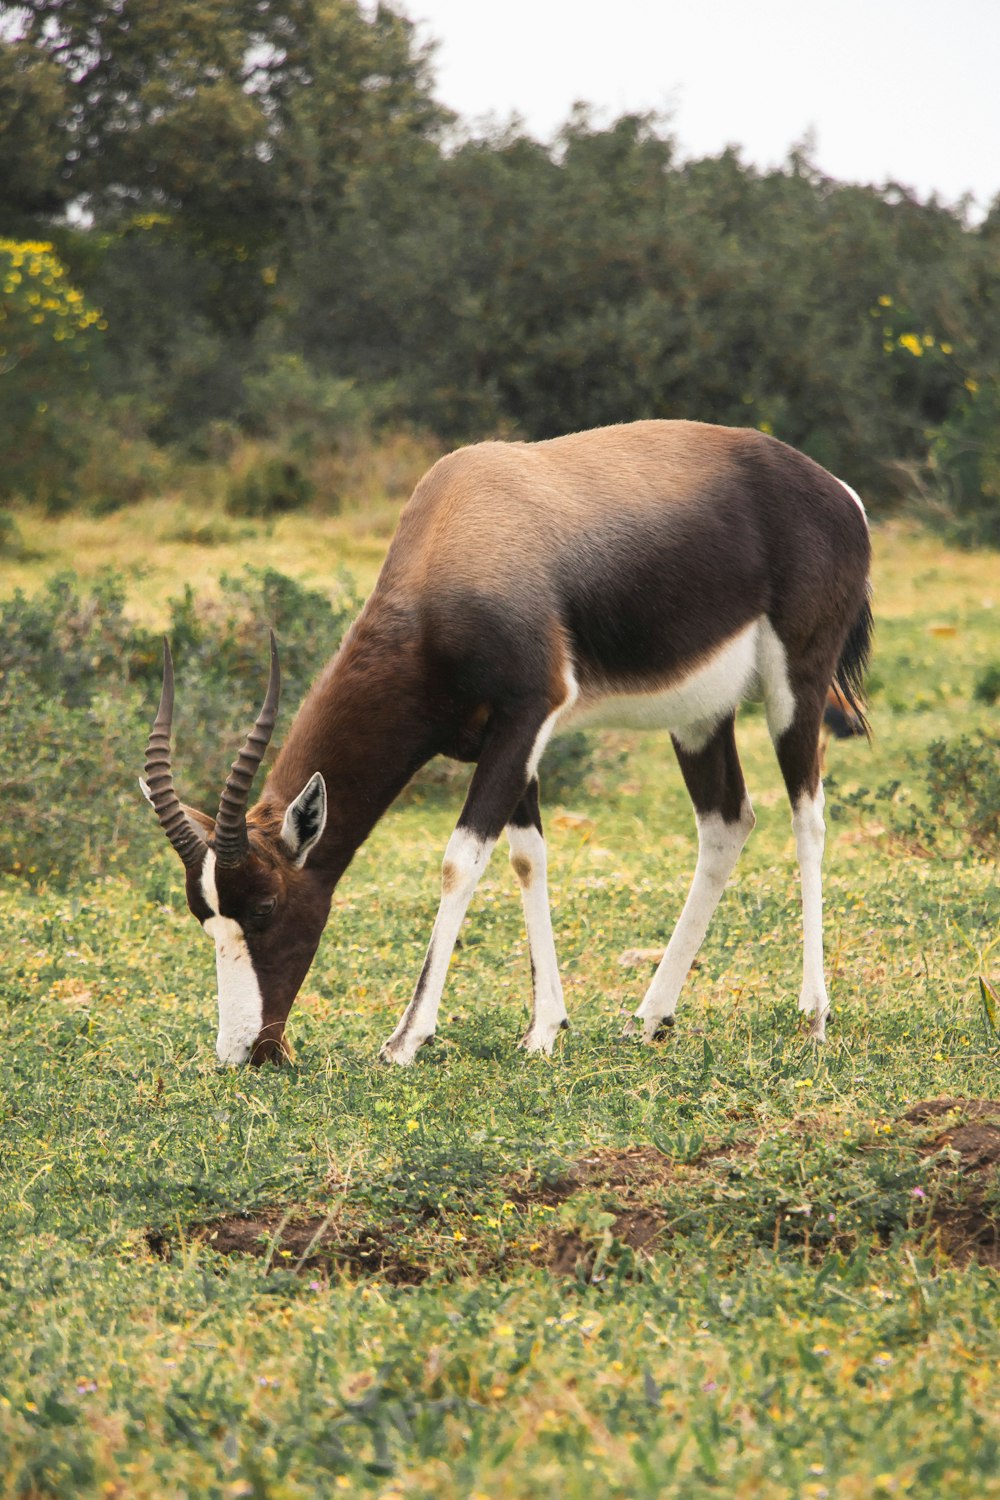 an antelope grazing on grass in a field